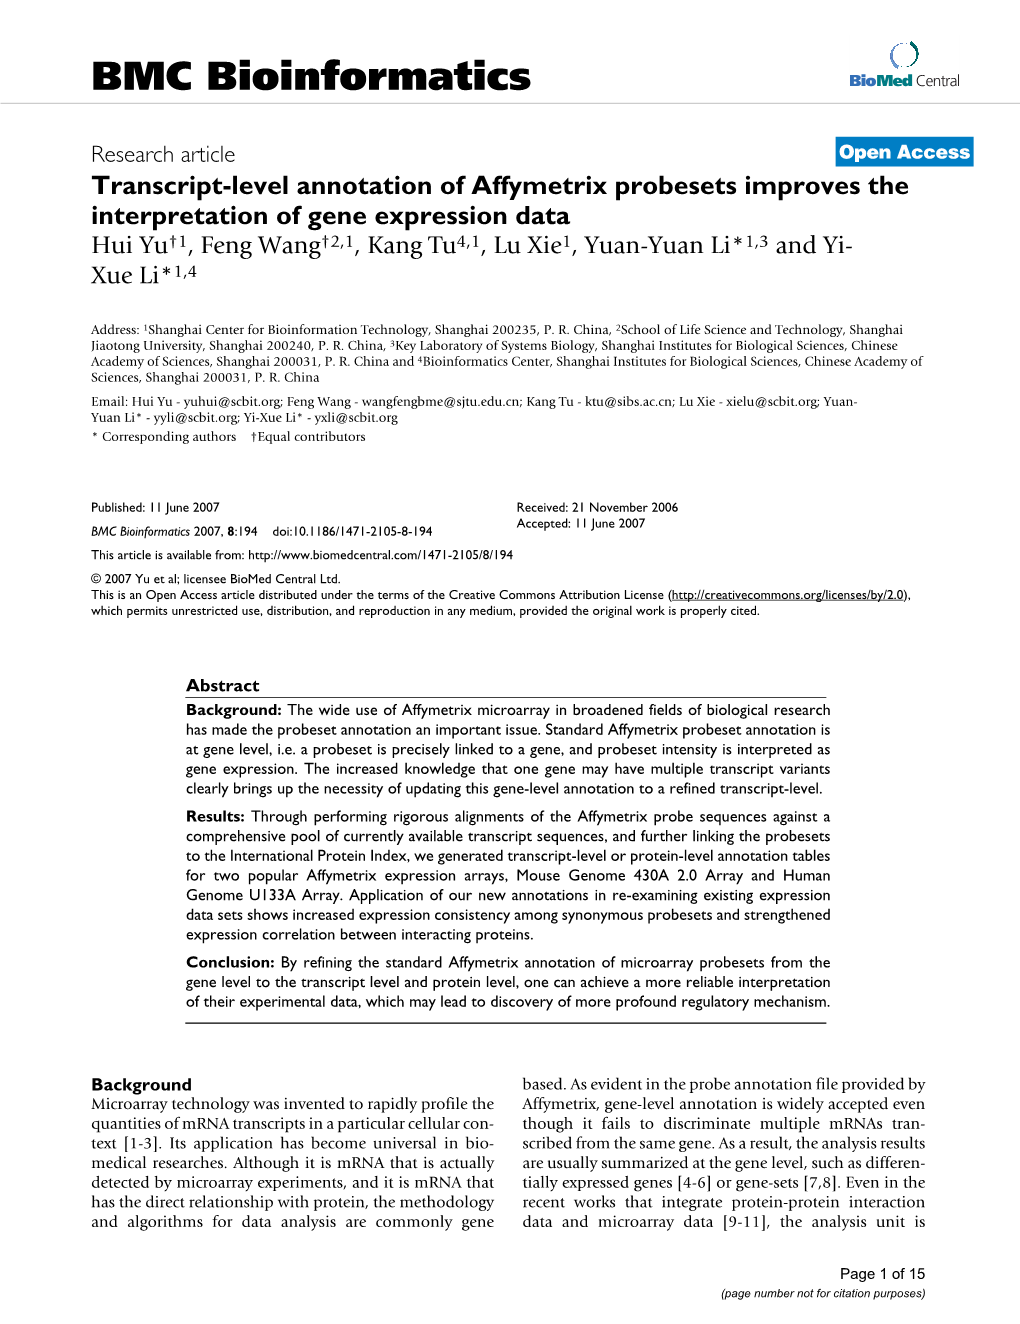 Transcript-Level Annotation of Affymetrix Probesets Improves The